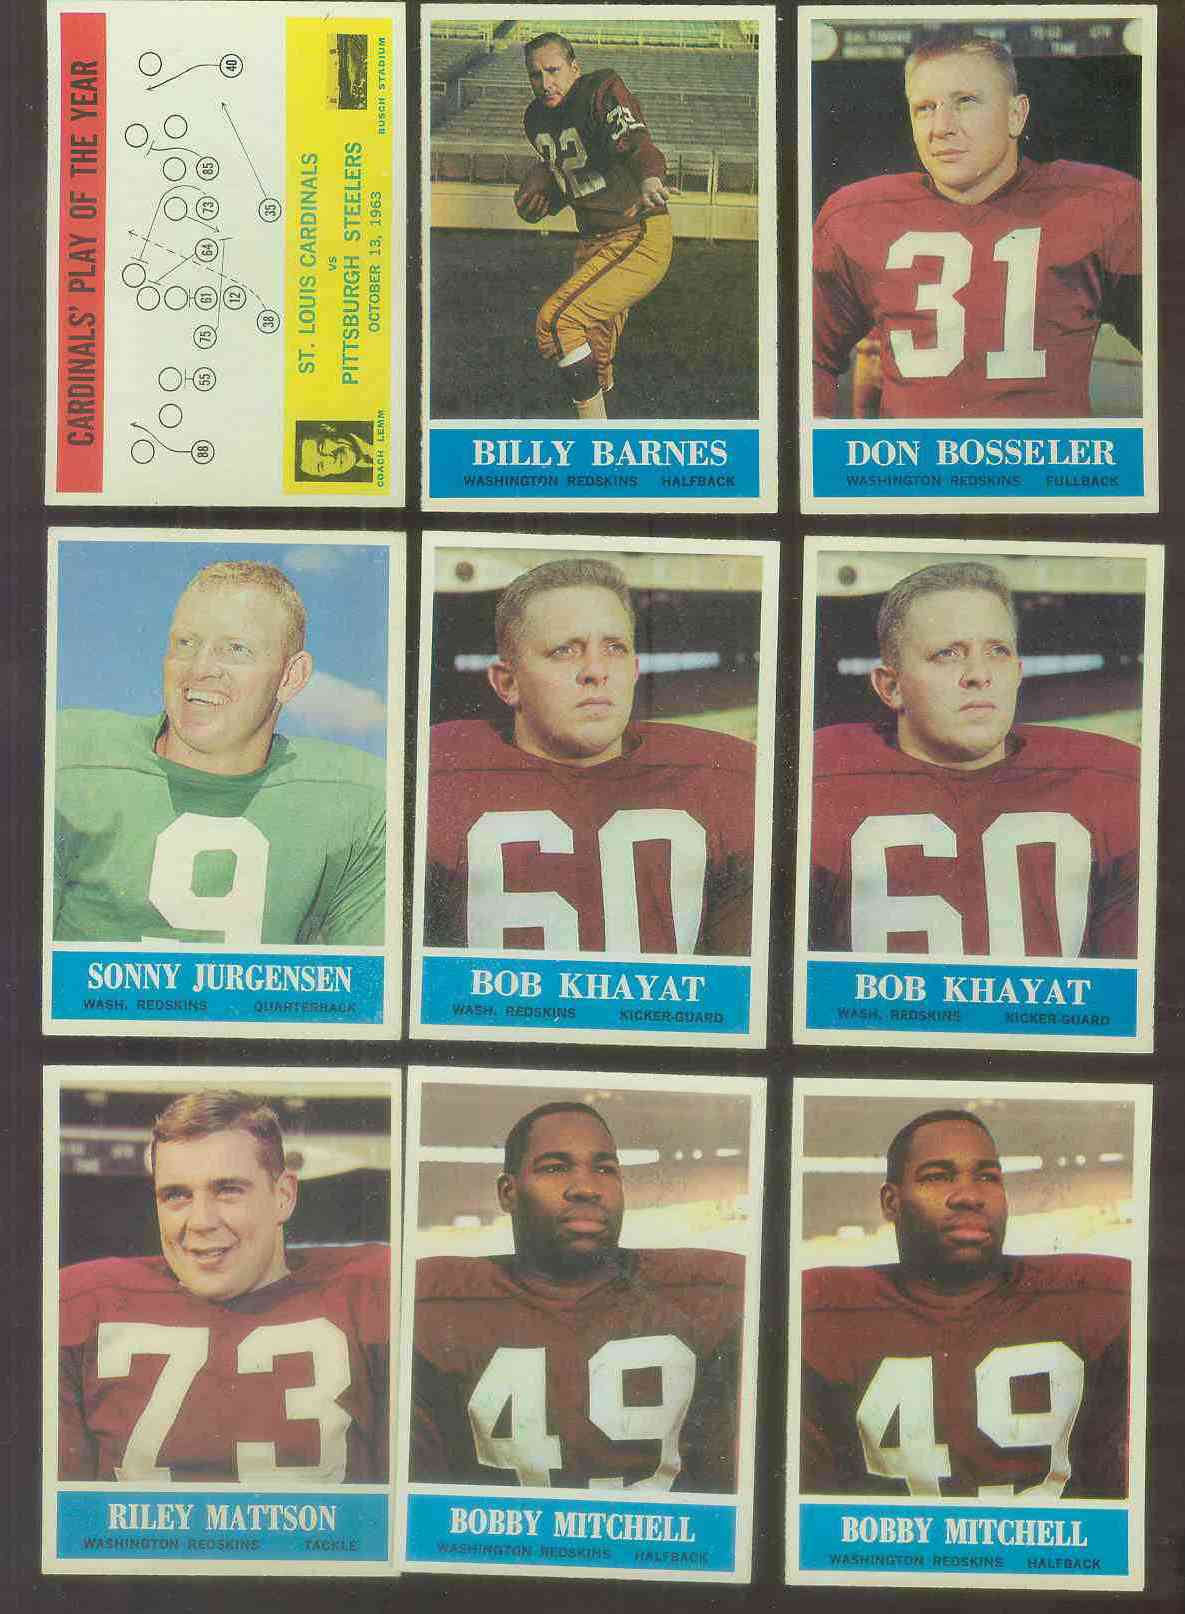 1964 Philadelphia FB #189 Bobby Mitchell (Redskins) Football cards value